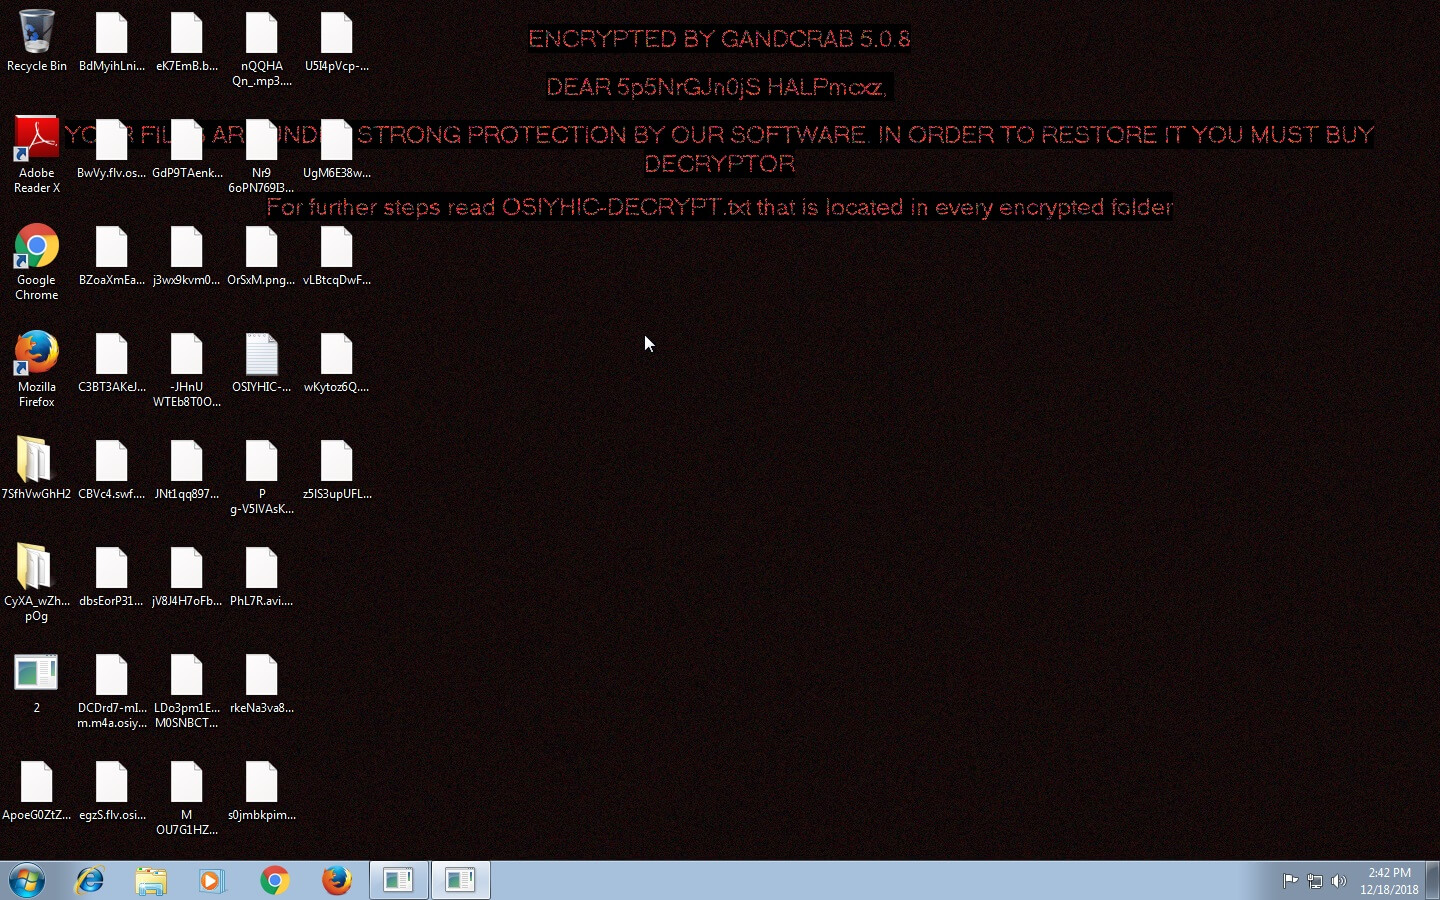 GandCrab 5.0.8 ransomware fond d'écran de virus